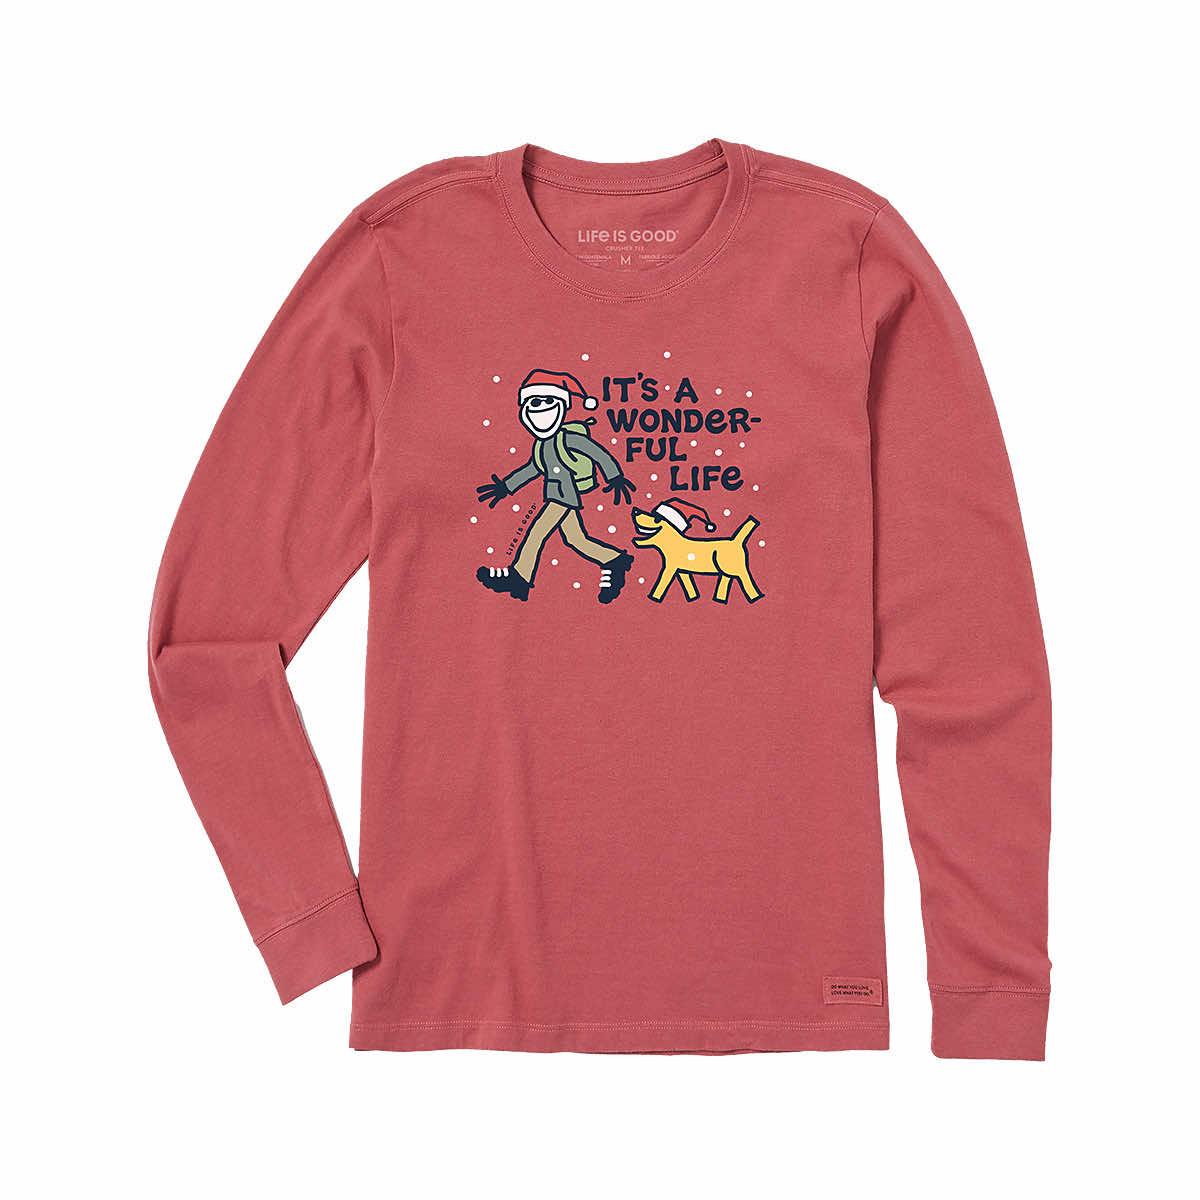 Lucky Brand Smokey Bear True Friend T-Shirt - Women's T-Shirts in Heather  Grey